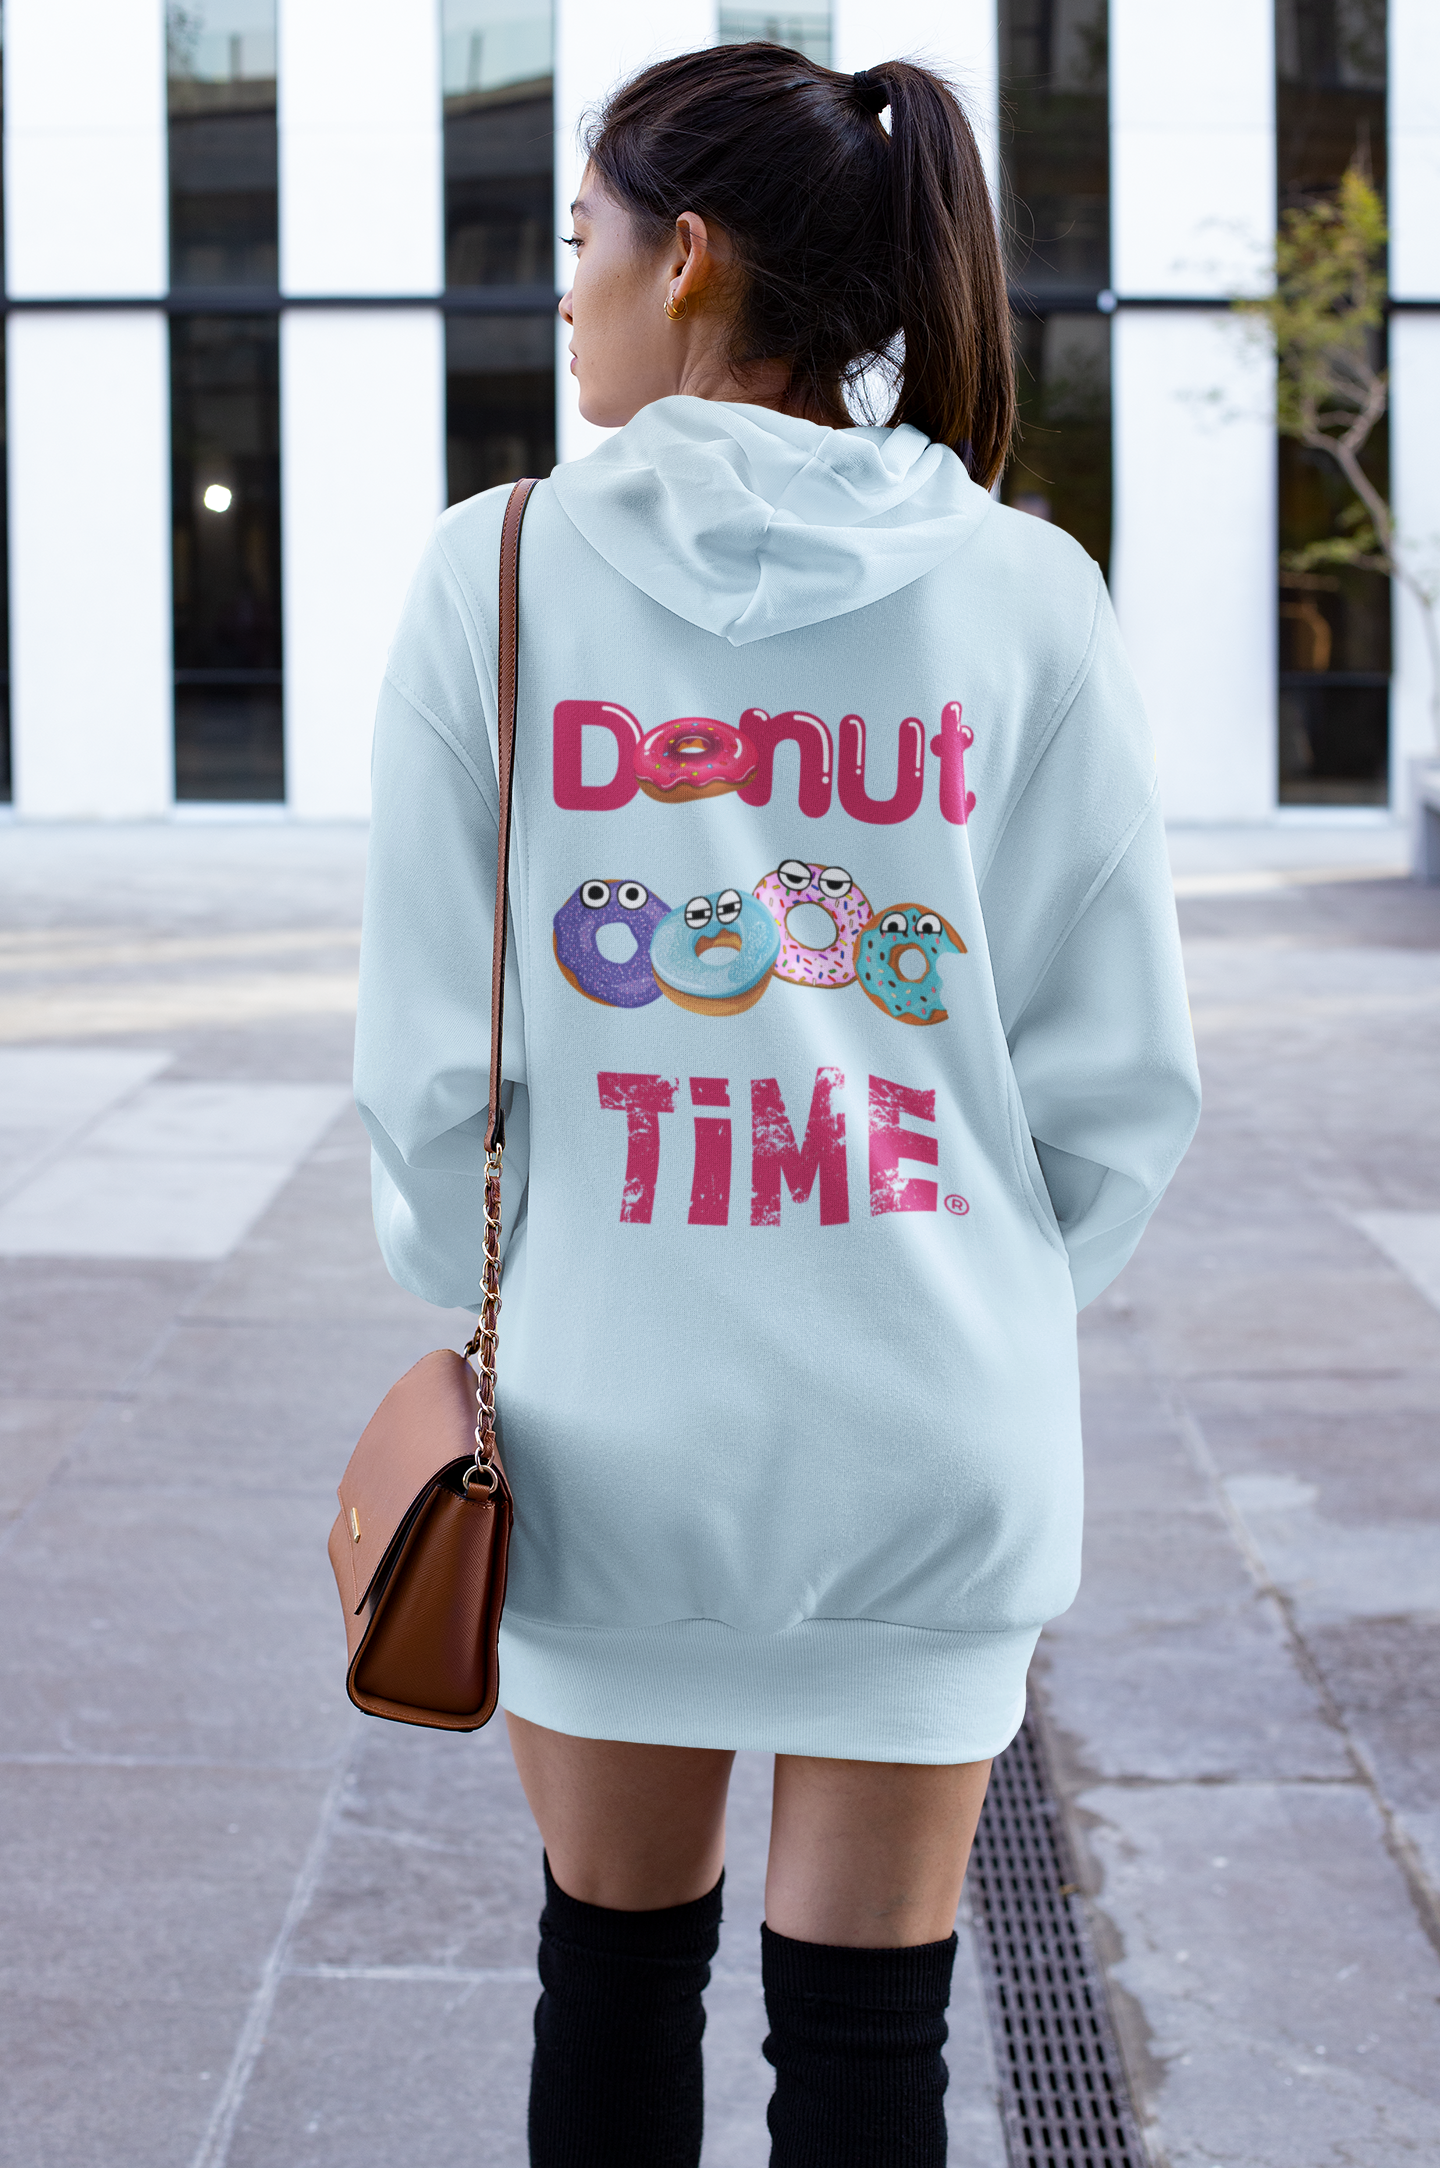 Donut Time - The Car Club